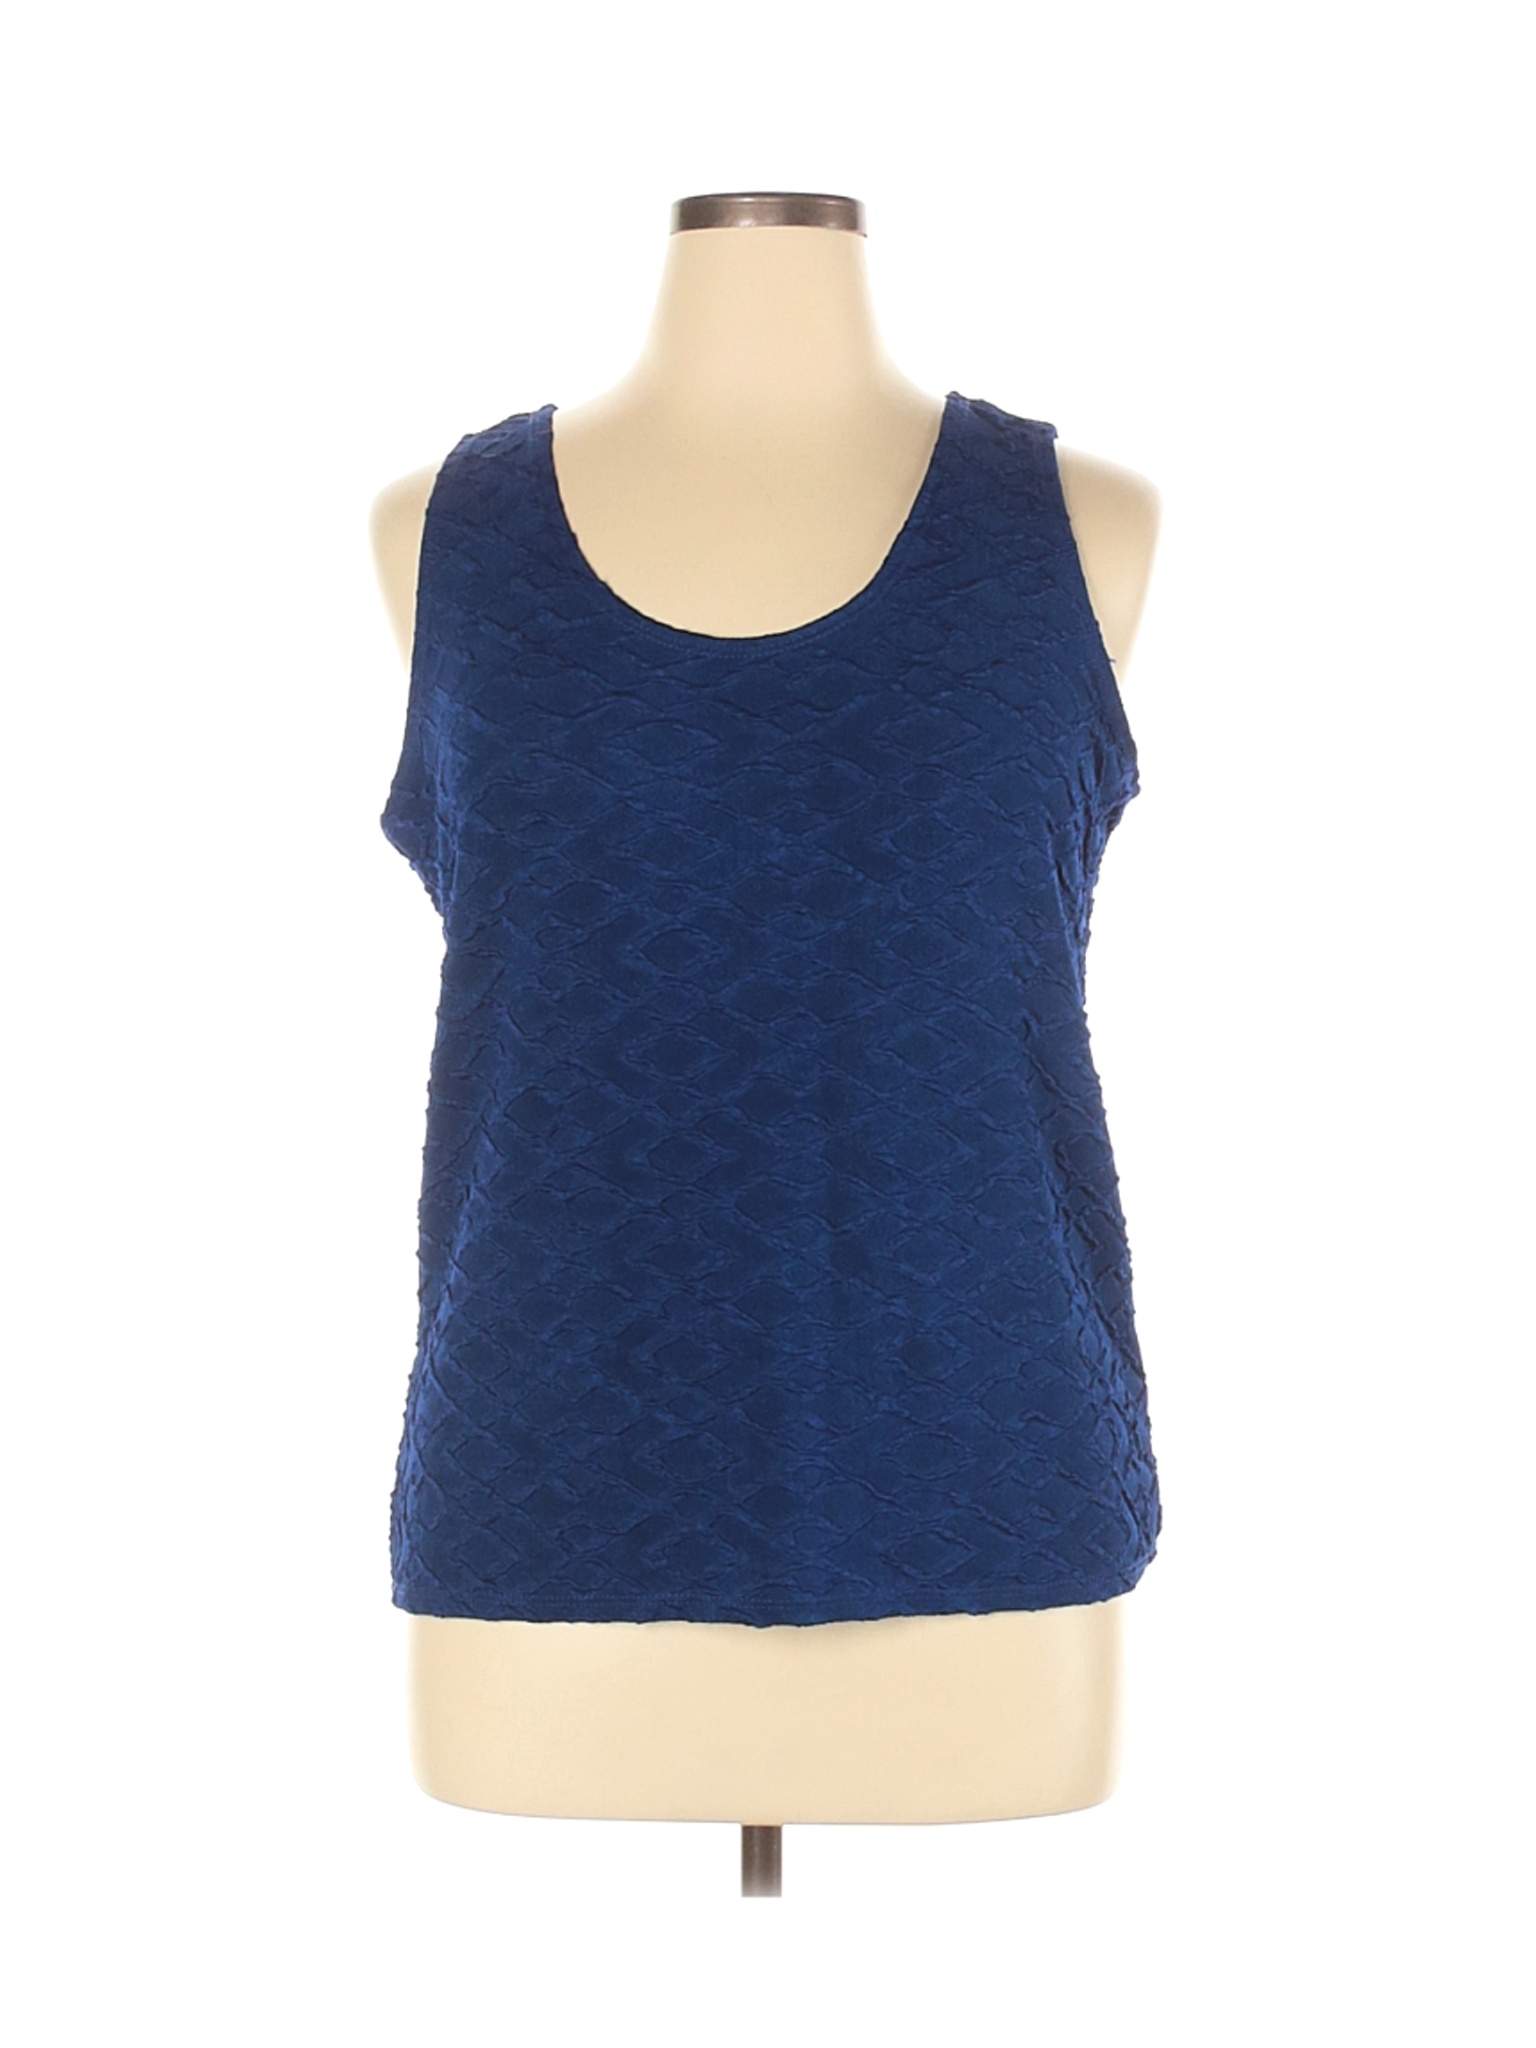 NWT Peck & Peck Women Blue Sleeveless Top XL | eBay